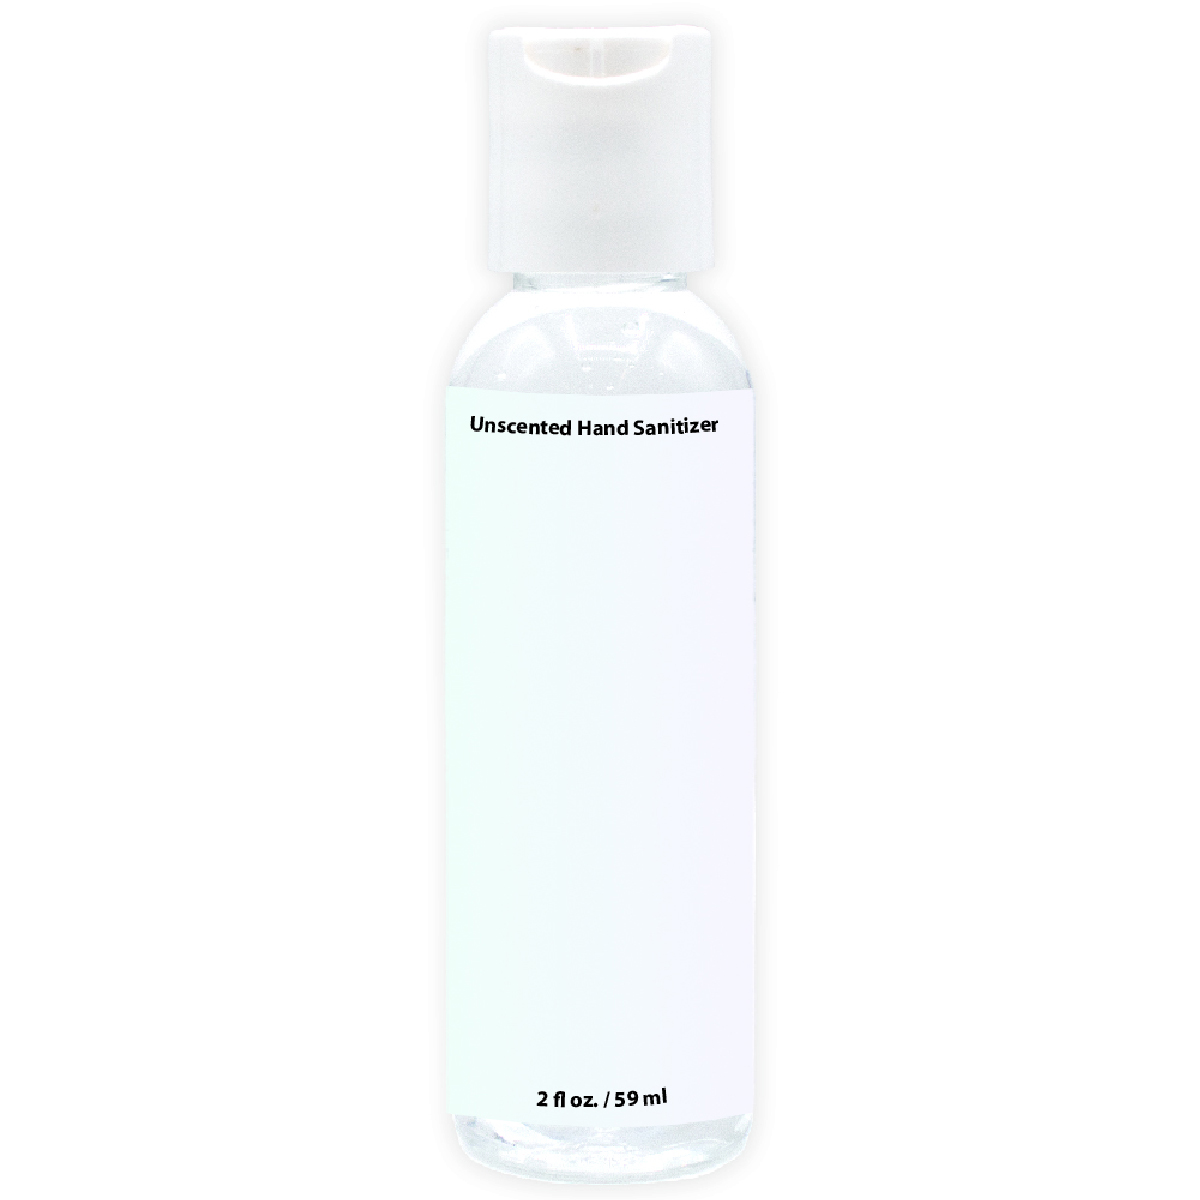 White 60% Hand Sanitizer Gel Bottle 2 fl oz